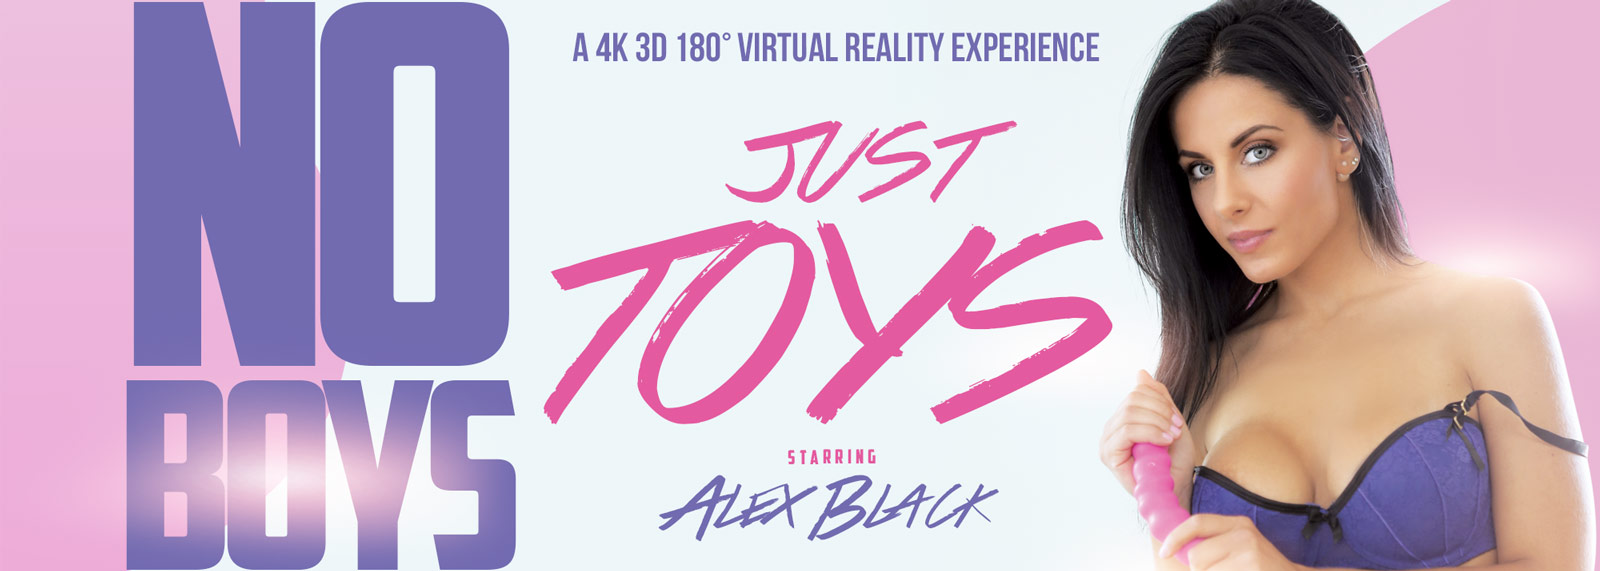 No Boys Just Toys with Alex Black  Slideshow